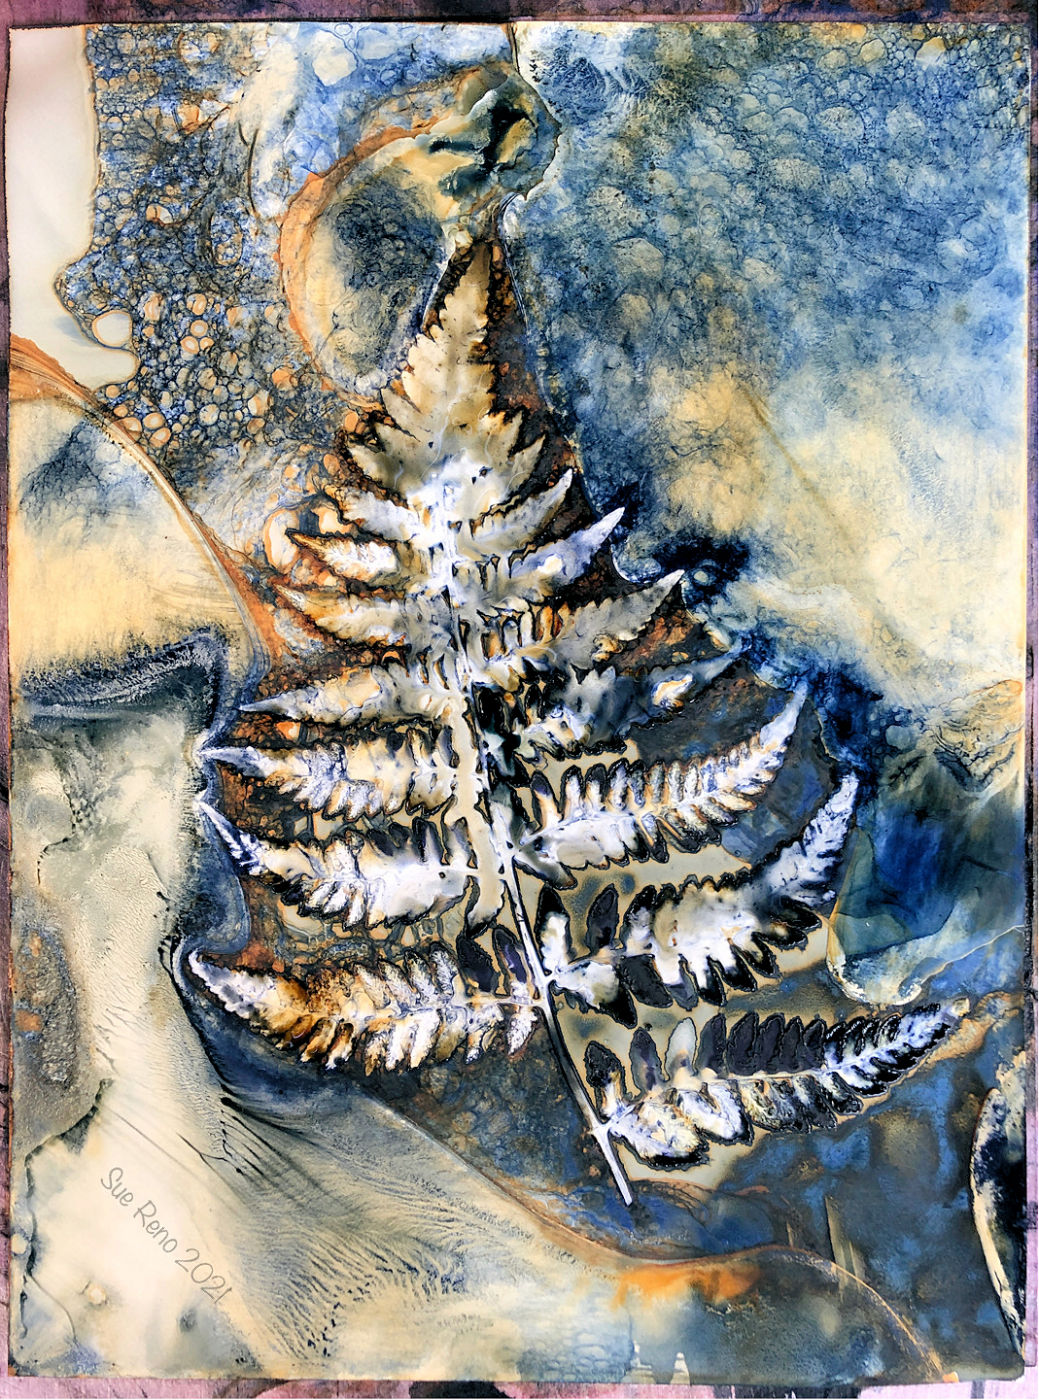 Sue Reno Studio - More wet cyanotype prints on mineral